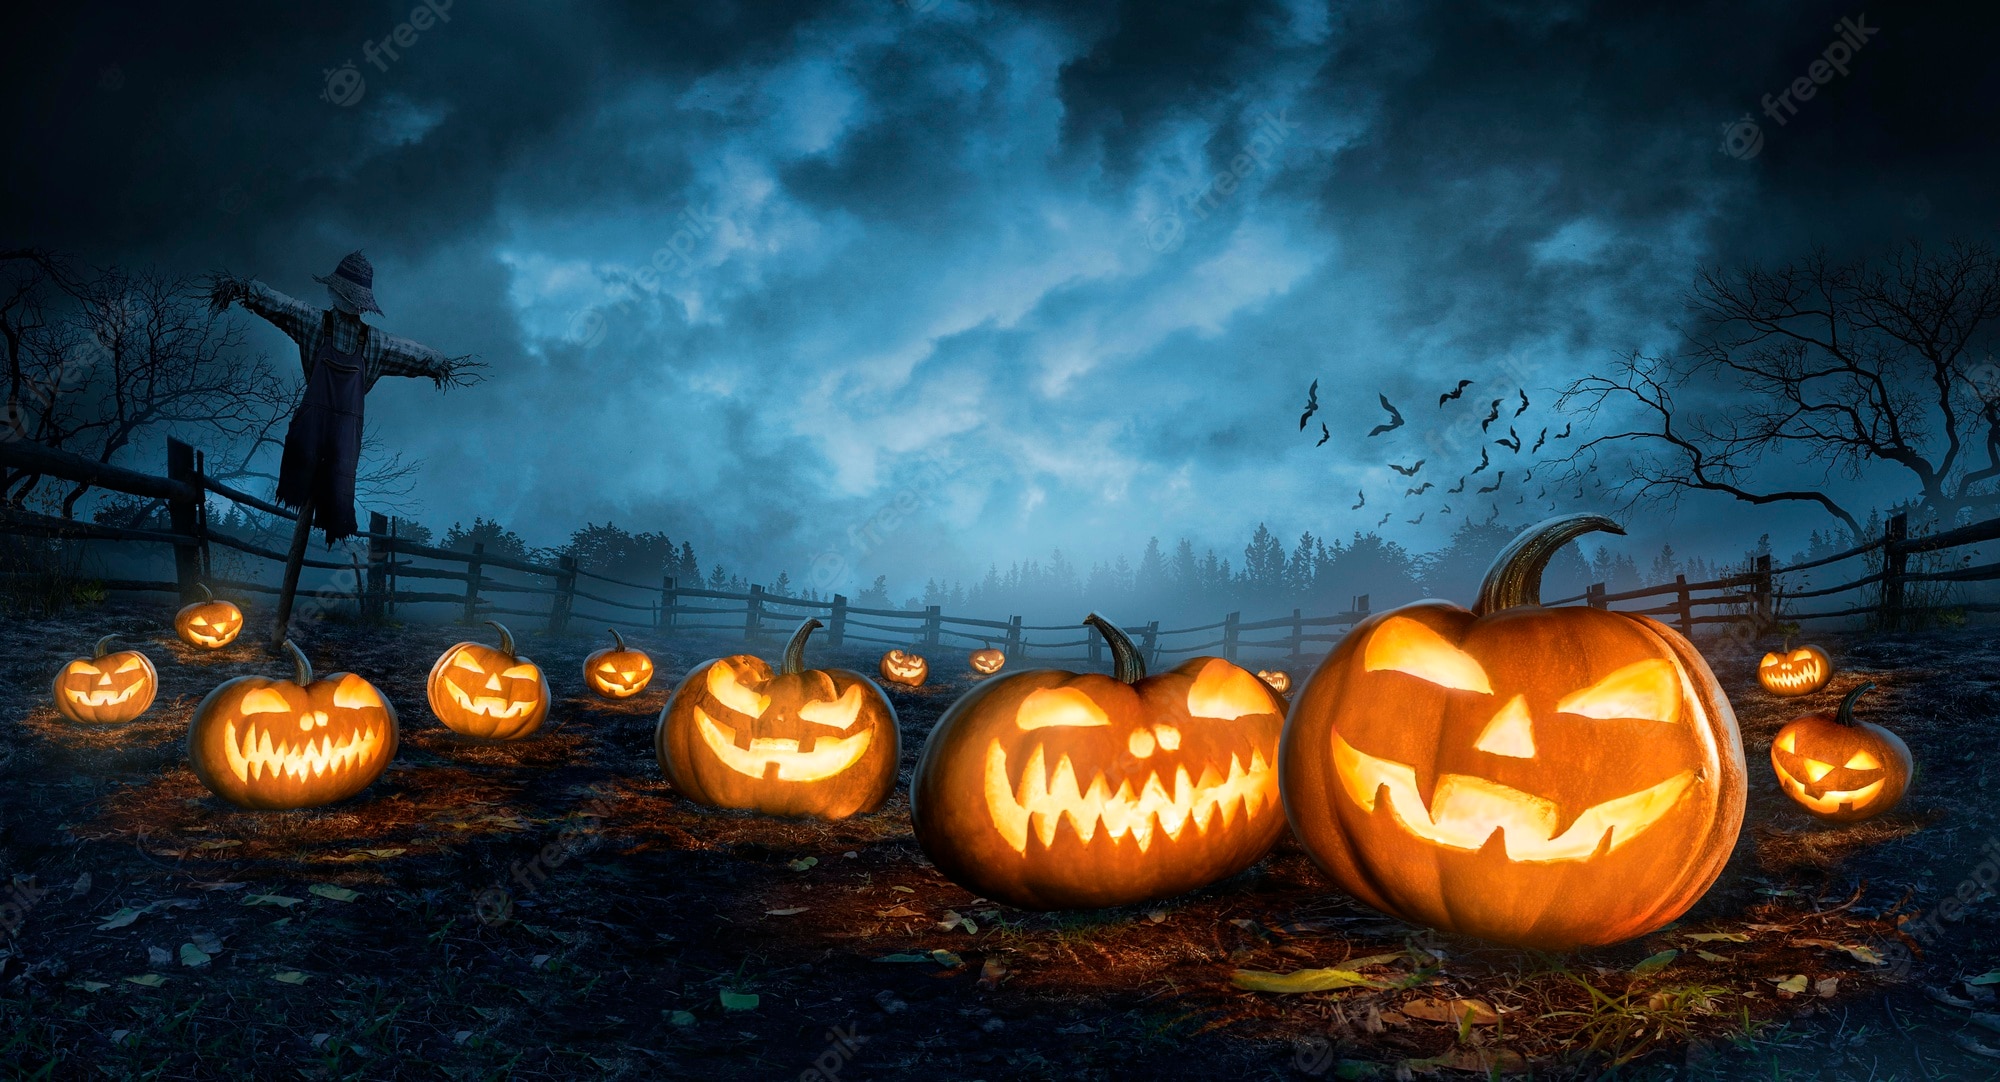 Halloween Background Image. Free Vectors, & PSD